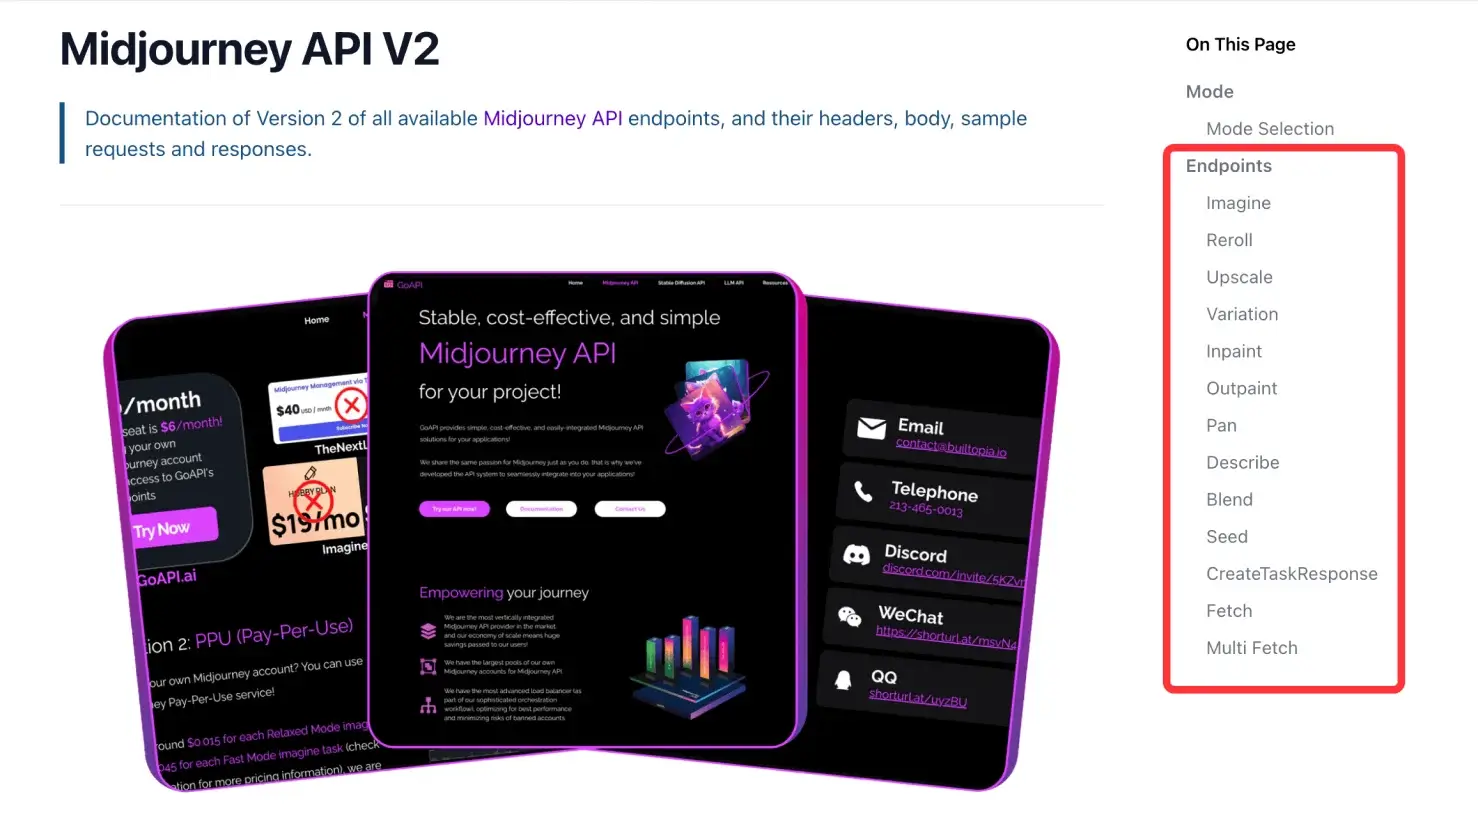 GoAPI's Midjourney API V2 endpoints